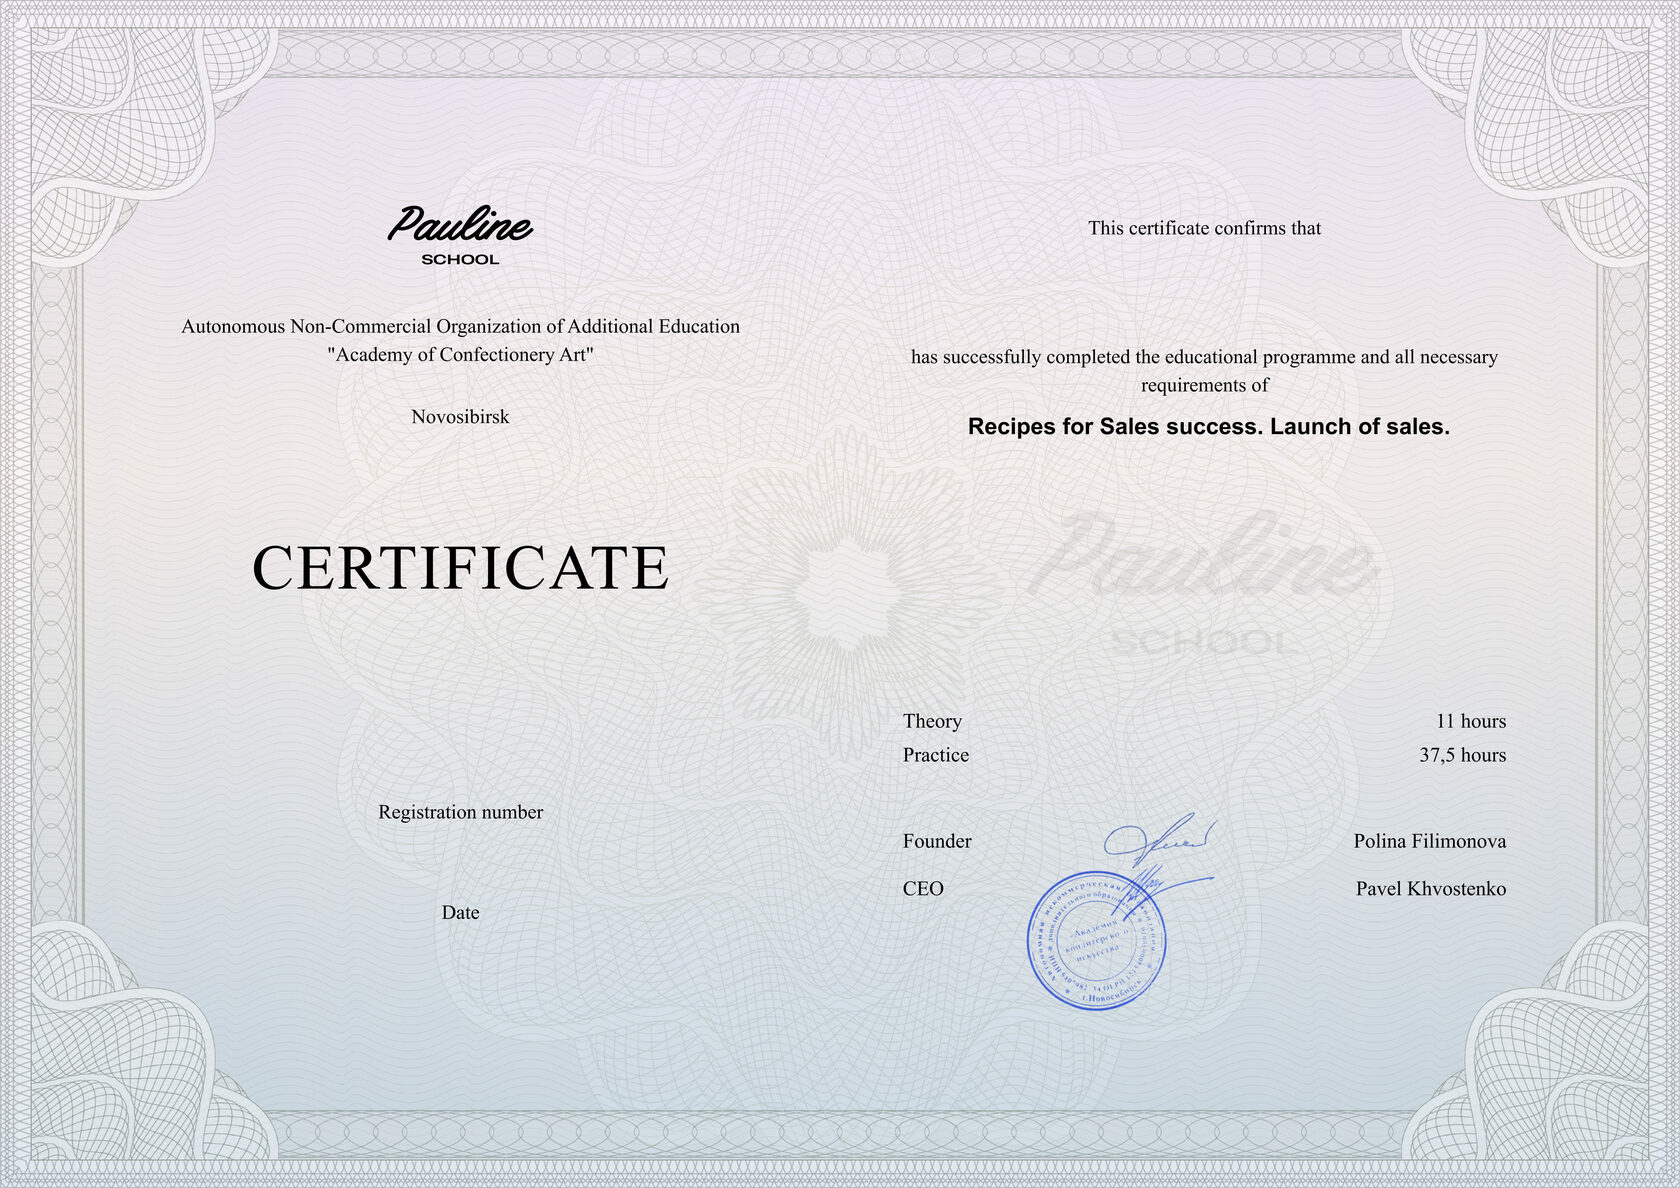 Сертификат начинающий кондитер Паулина скул